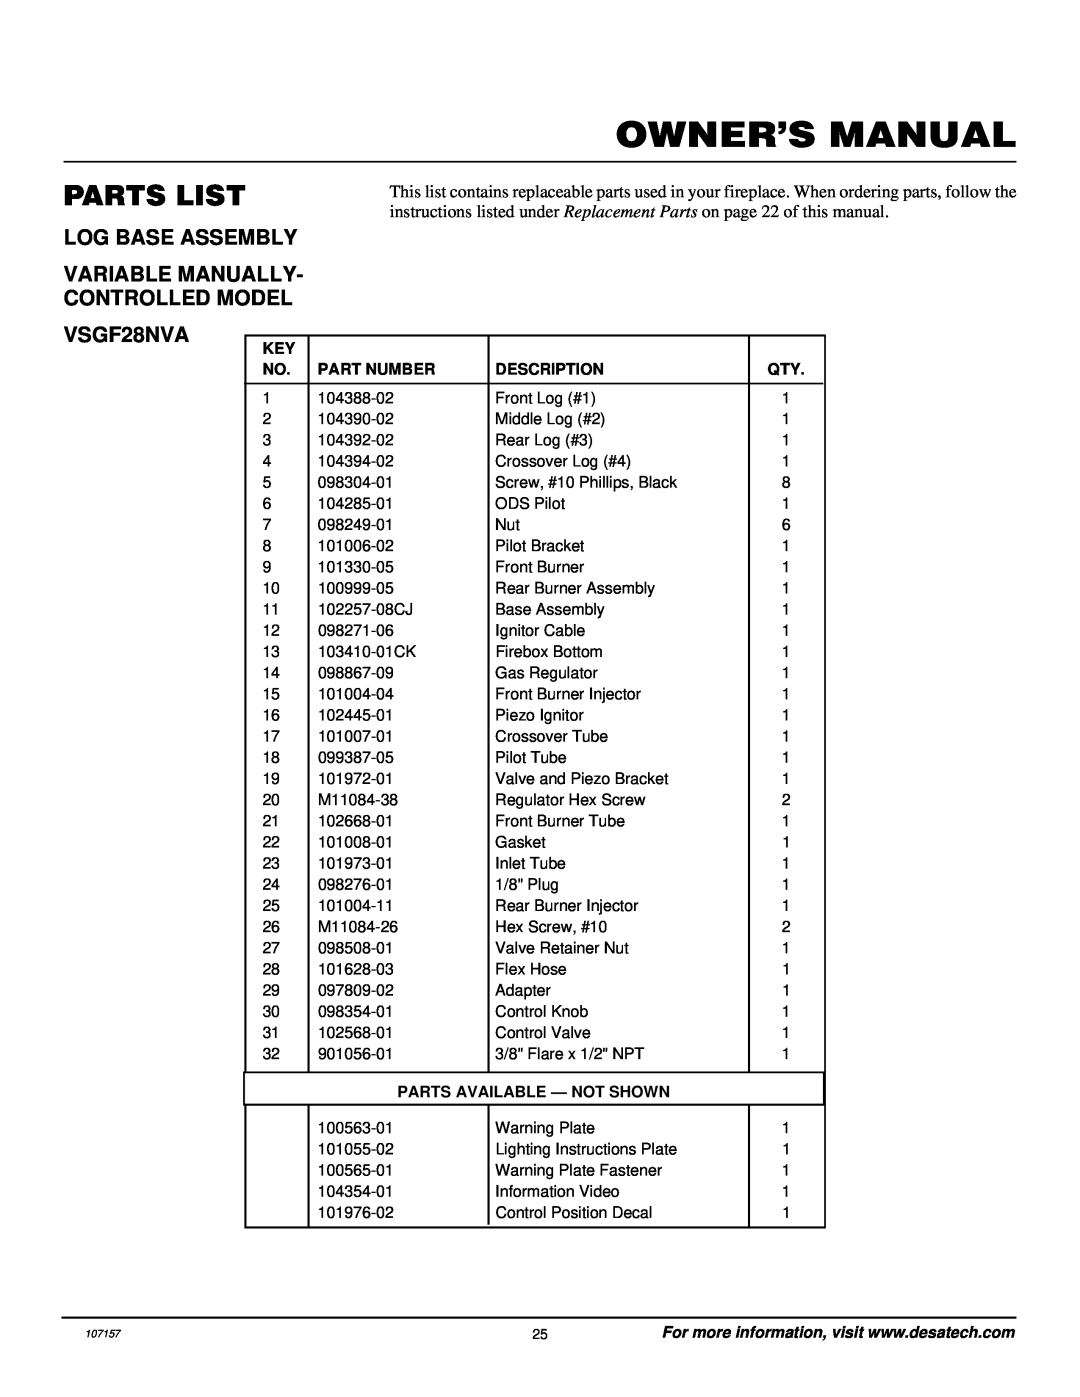 Vanguard Heating VSGF28NTC Parts List, Log Base Assembly, Variable Manually, Controlled Model, VSGF28NVA, Part Number 